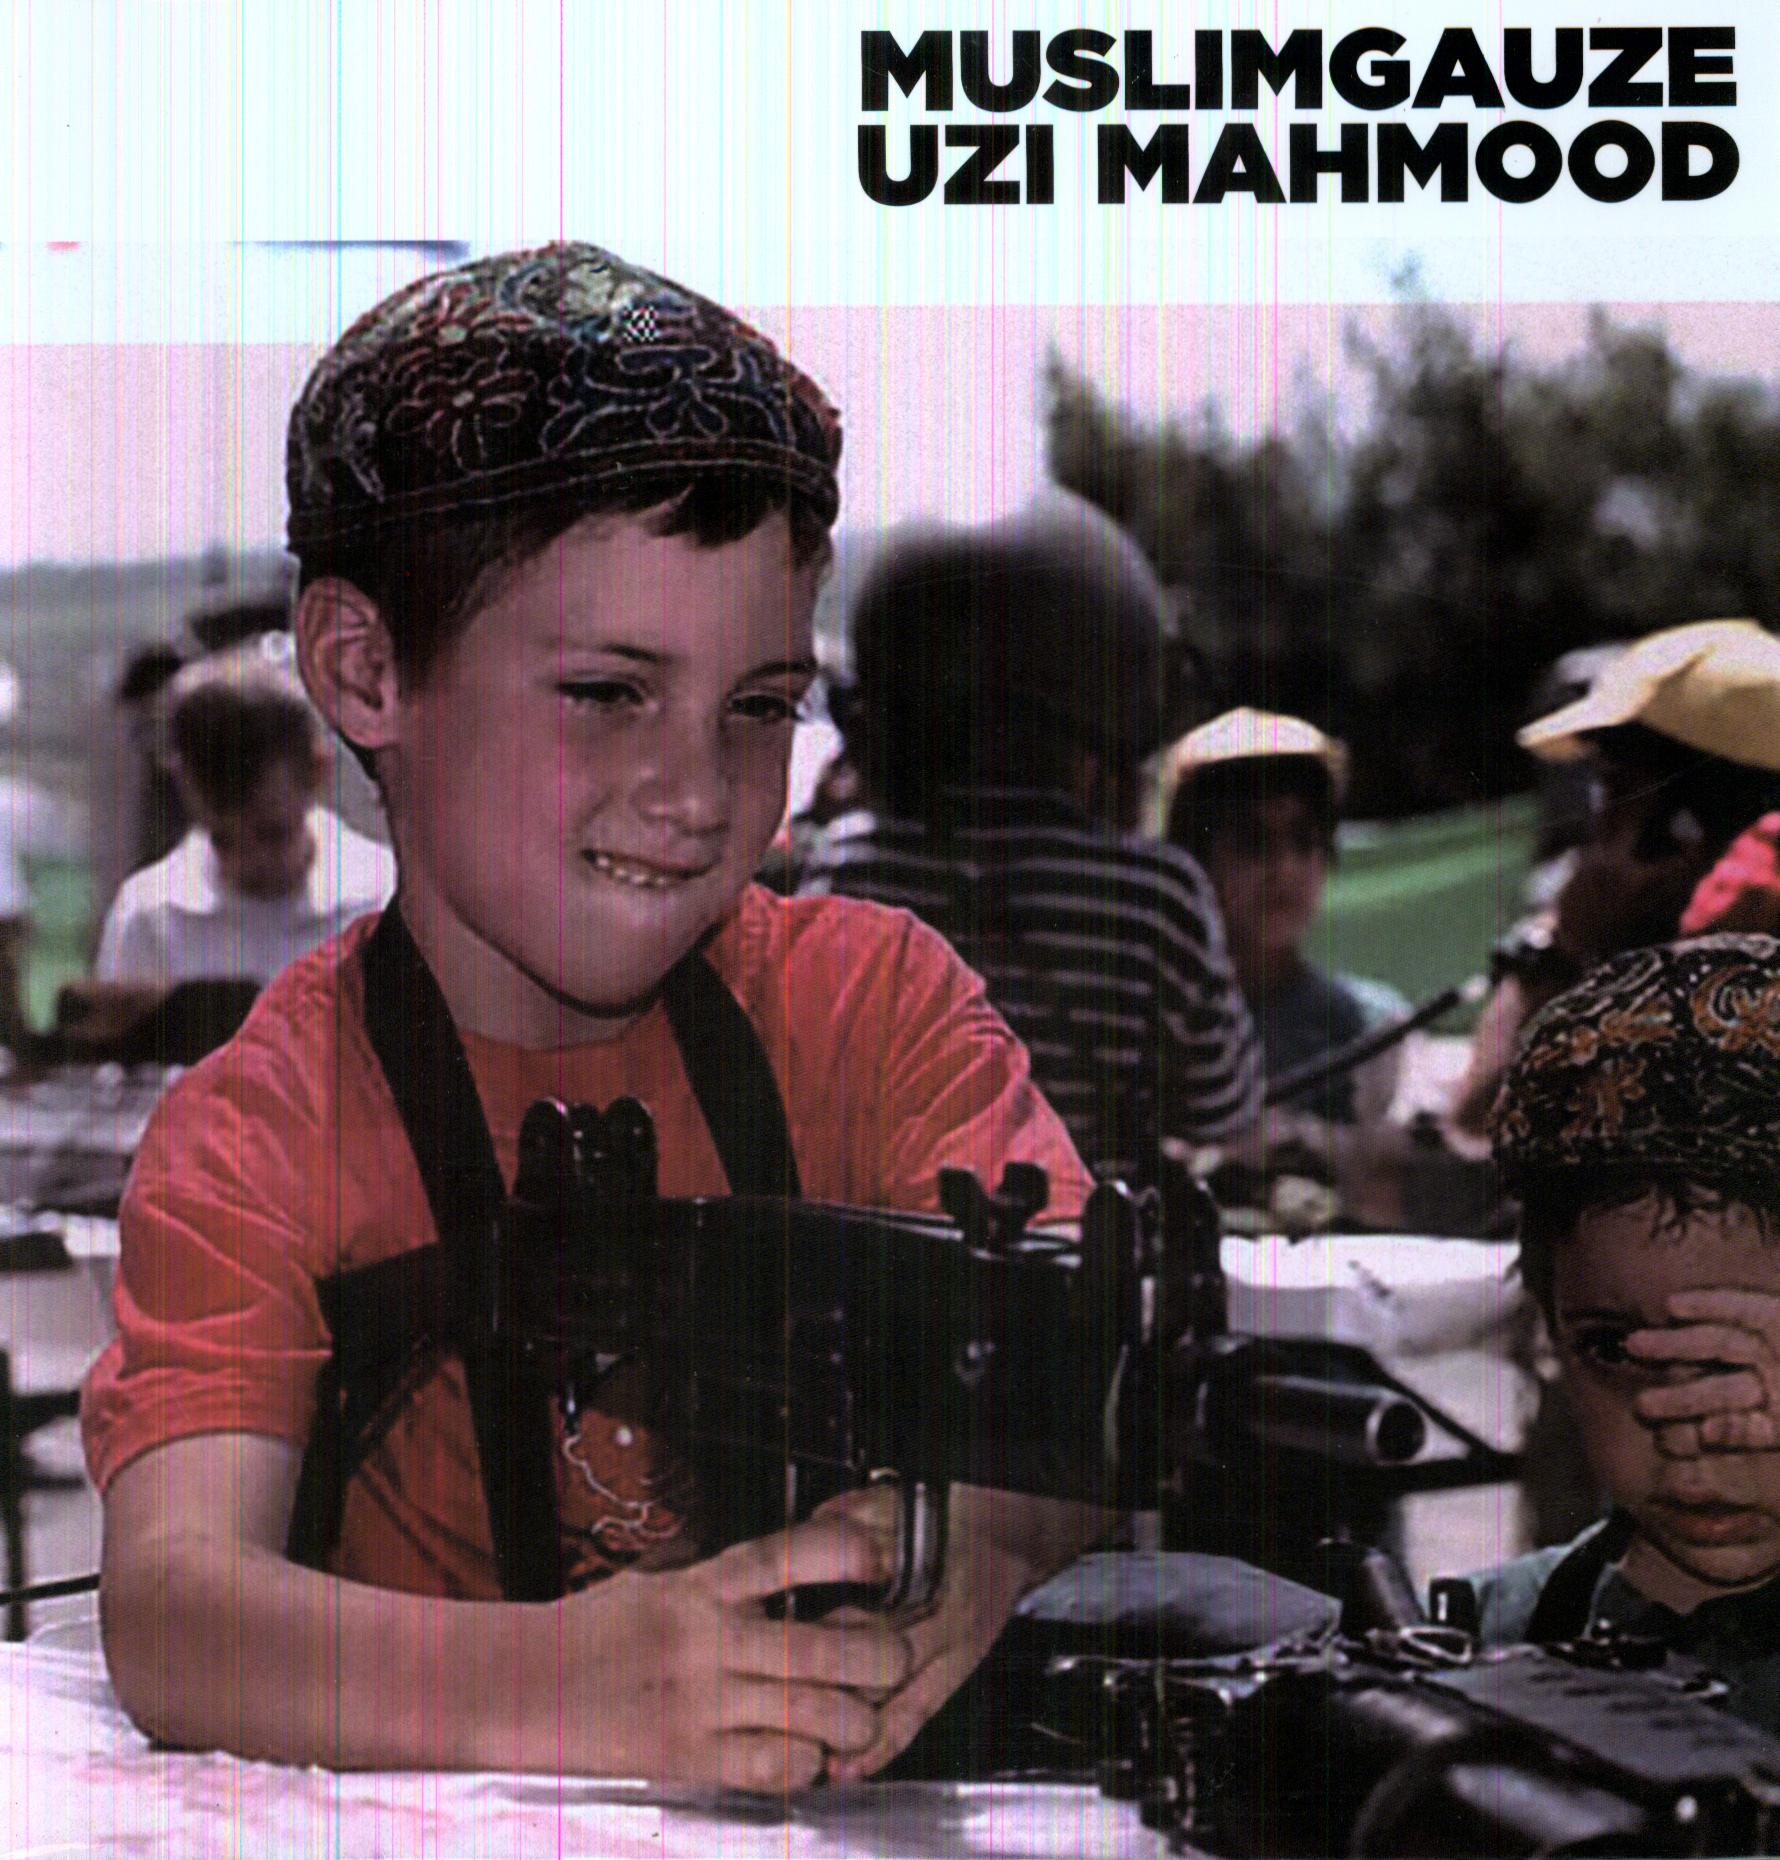 UZI MAHMOOD